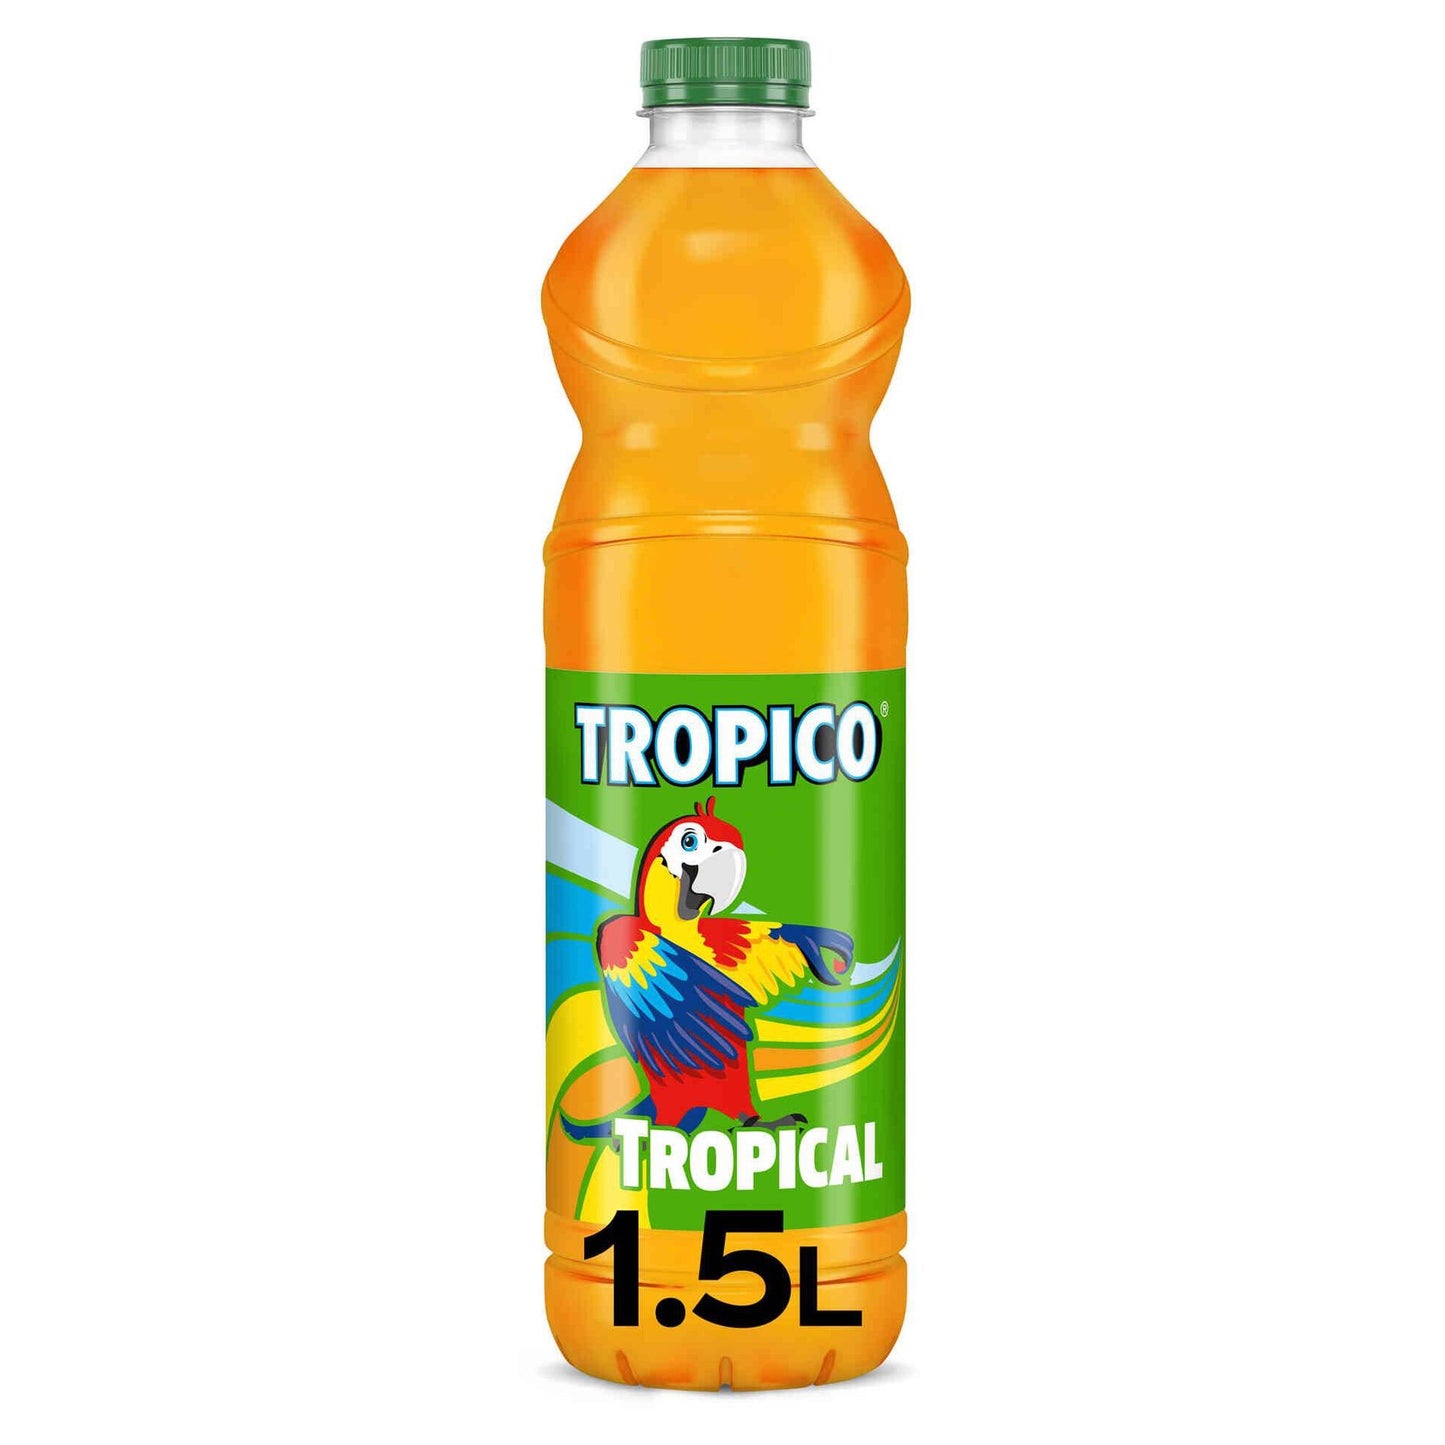 Tropical Tropico 1.5L